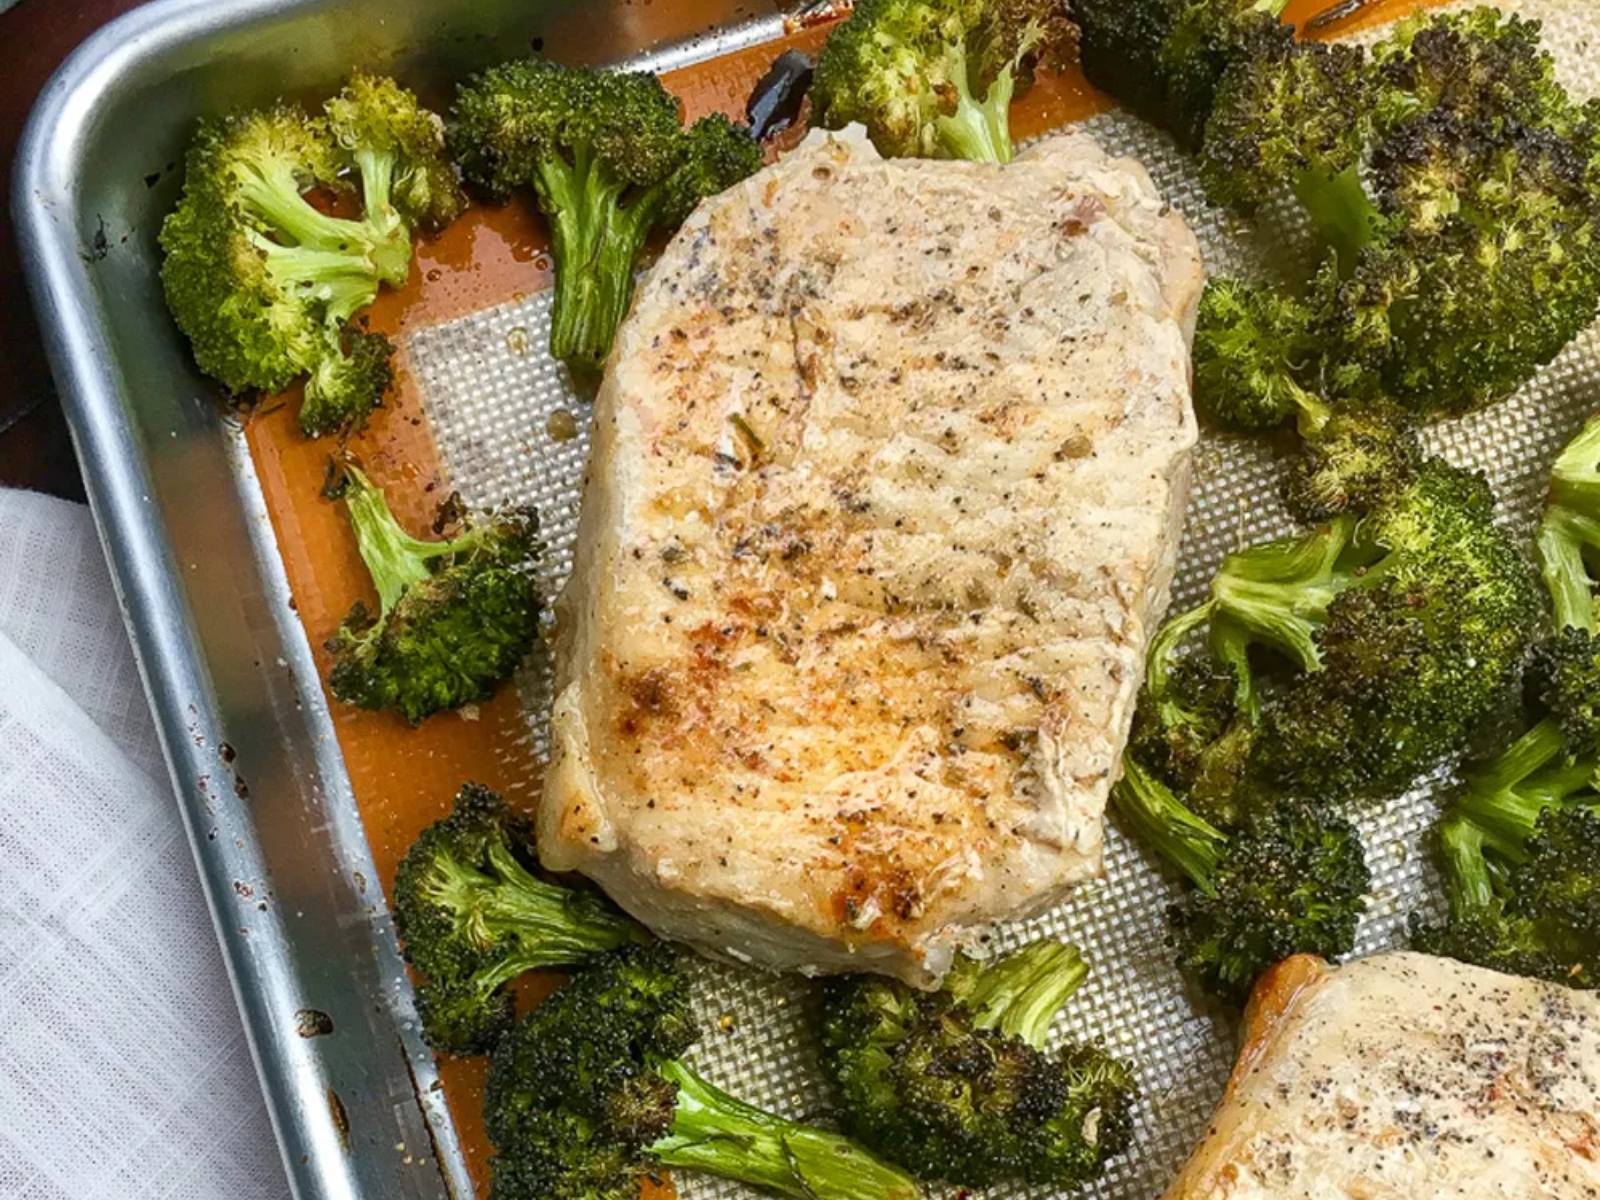 Sheet-pan Boneless Pork Chops with Broccoli